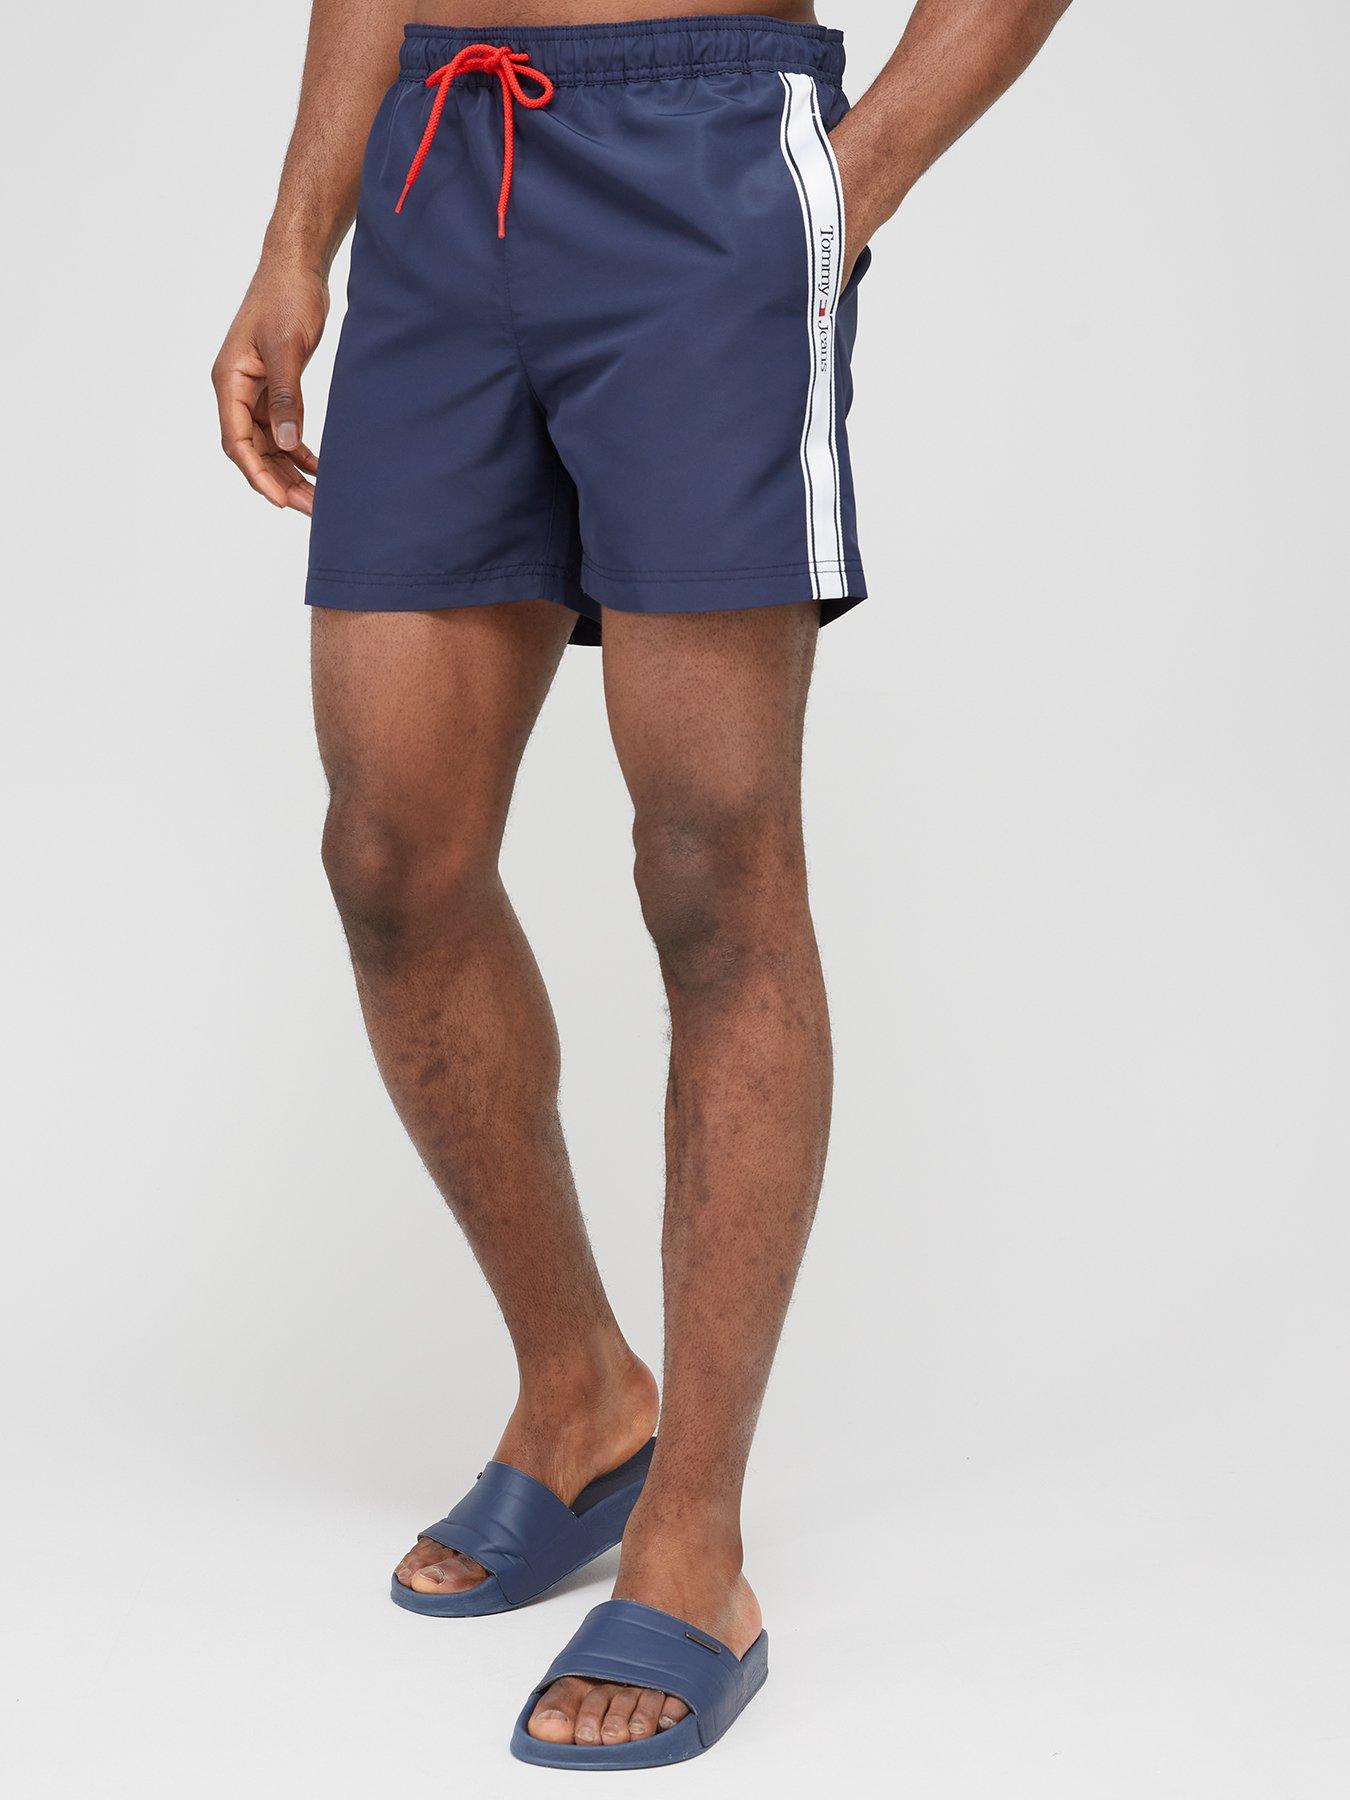 Hilfiger | Mens Hilfiger Shorts | Very.co.uk